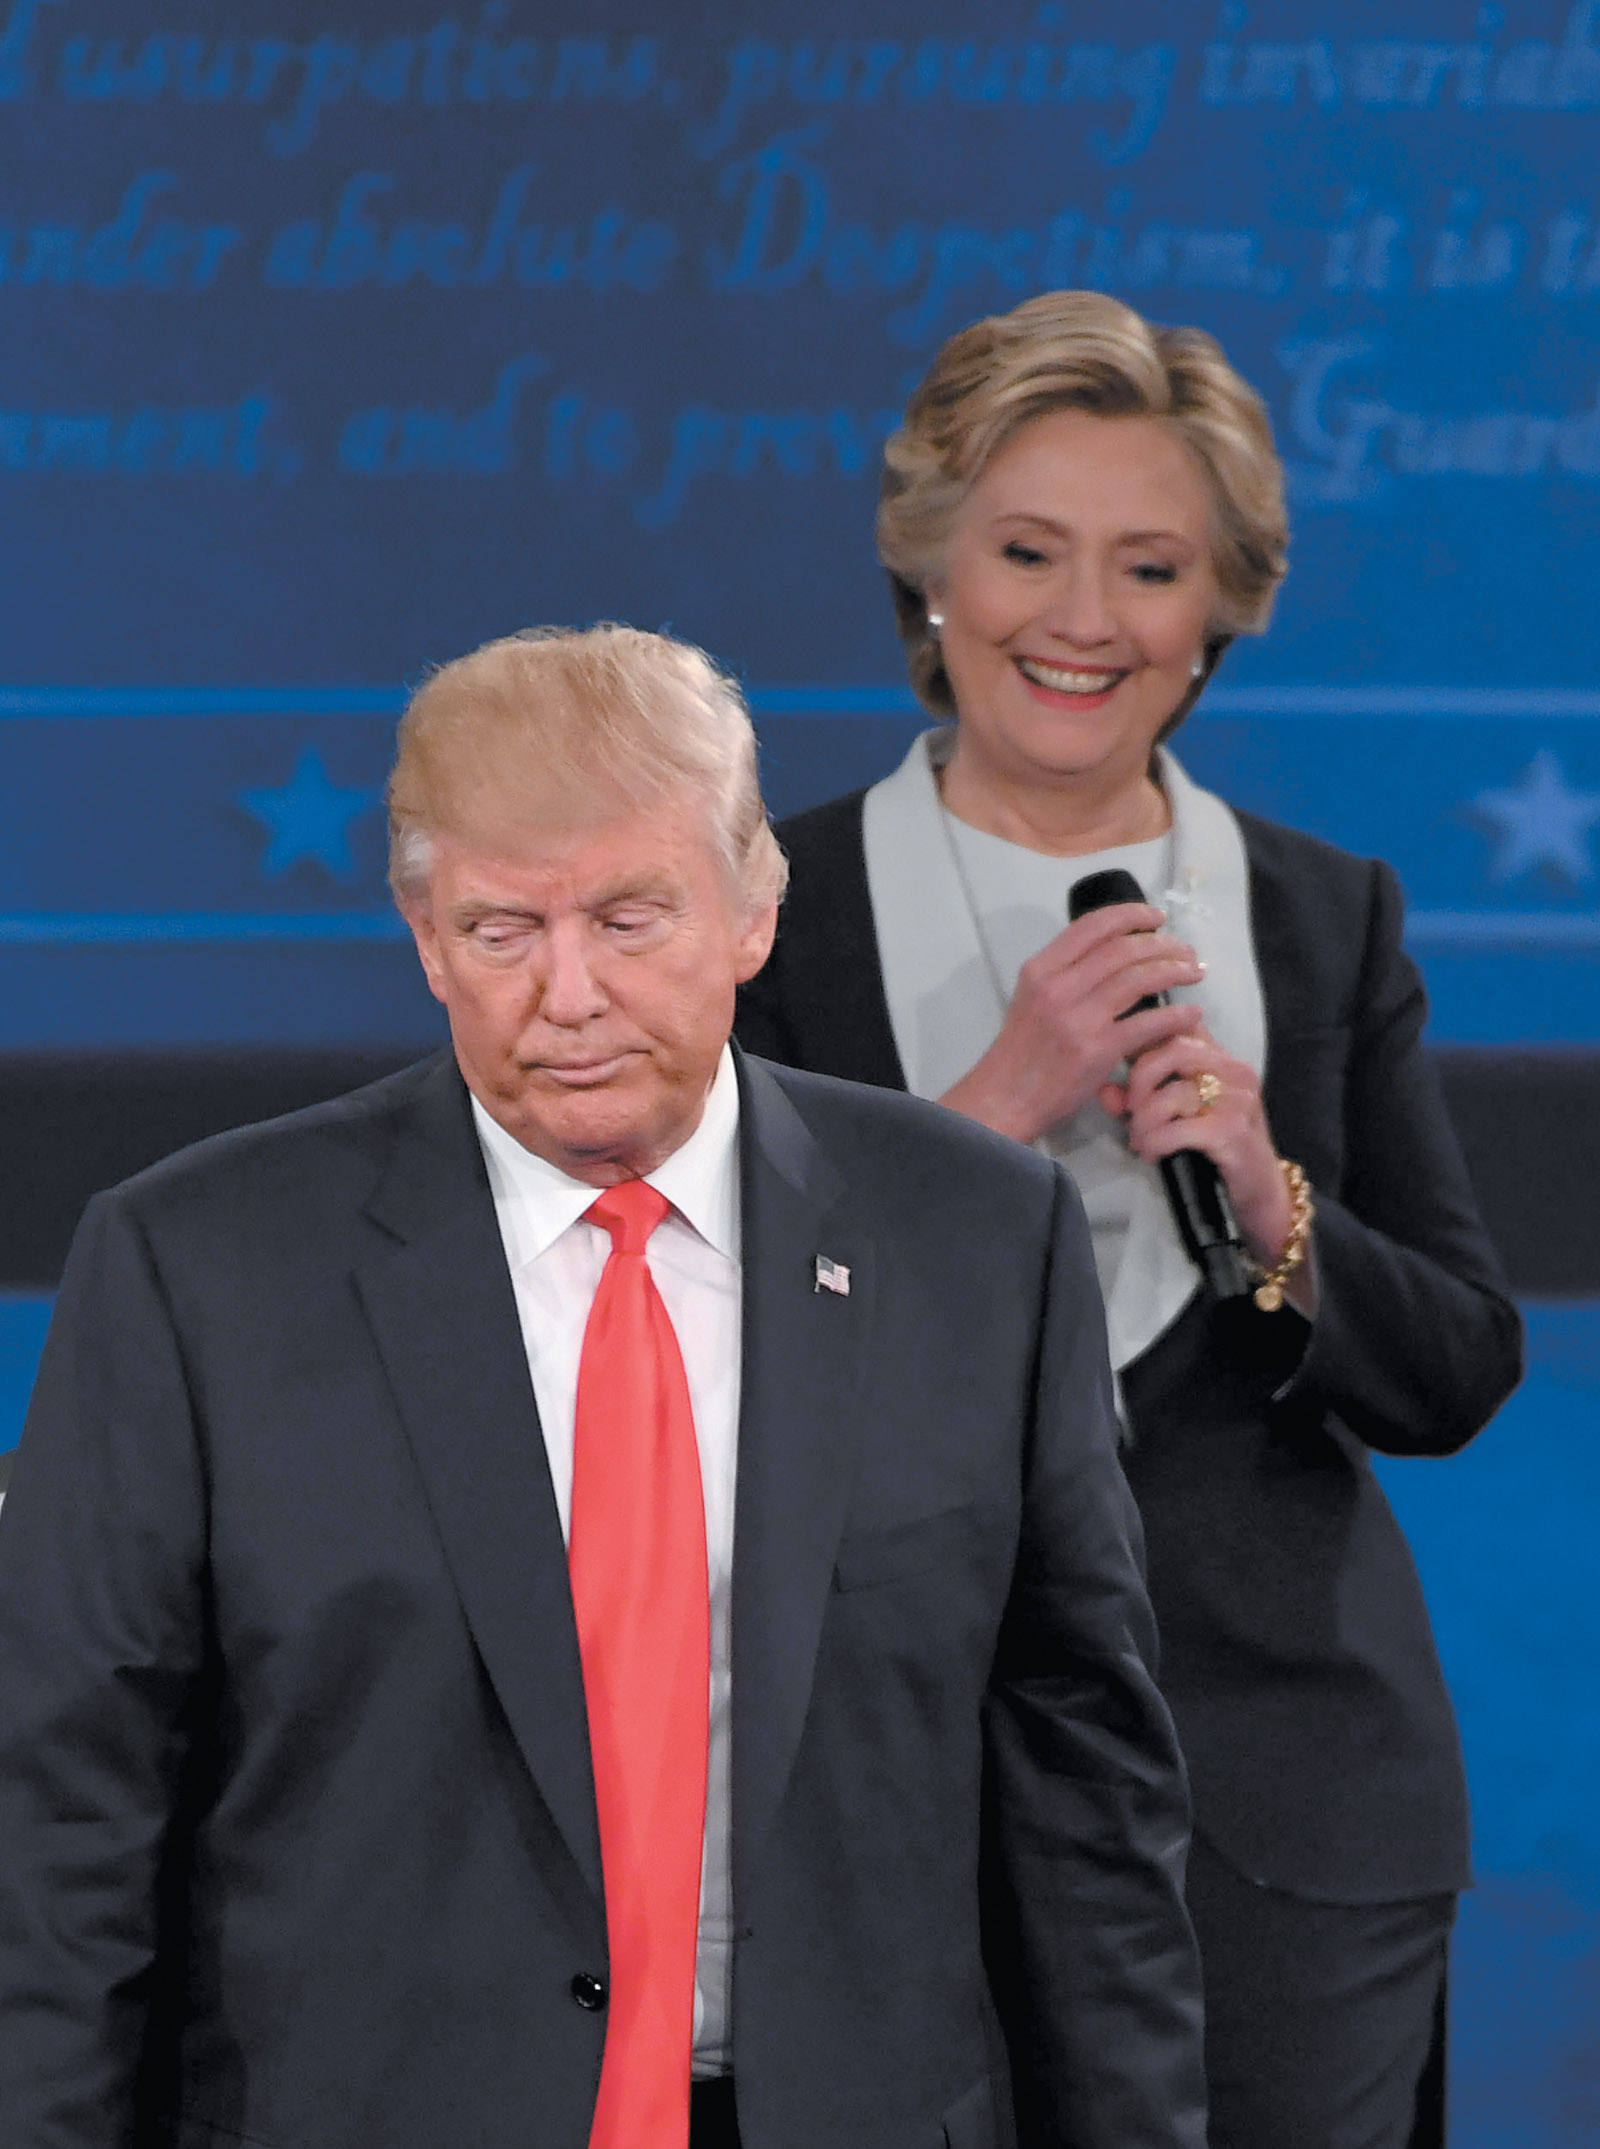 Donald Trump and Hillary Clinton at the second presidential debate, Washington University, St. Louis, Missouri, October 9, 2016